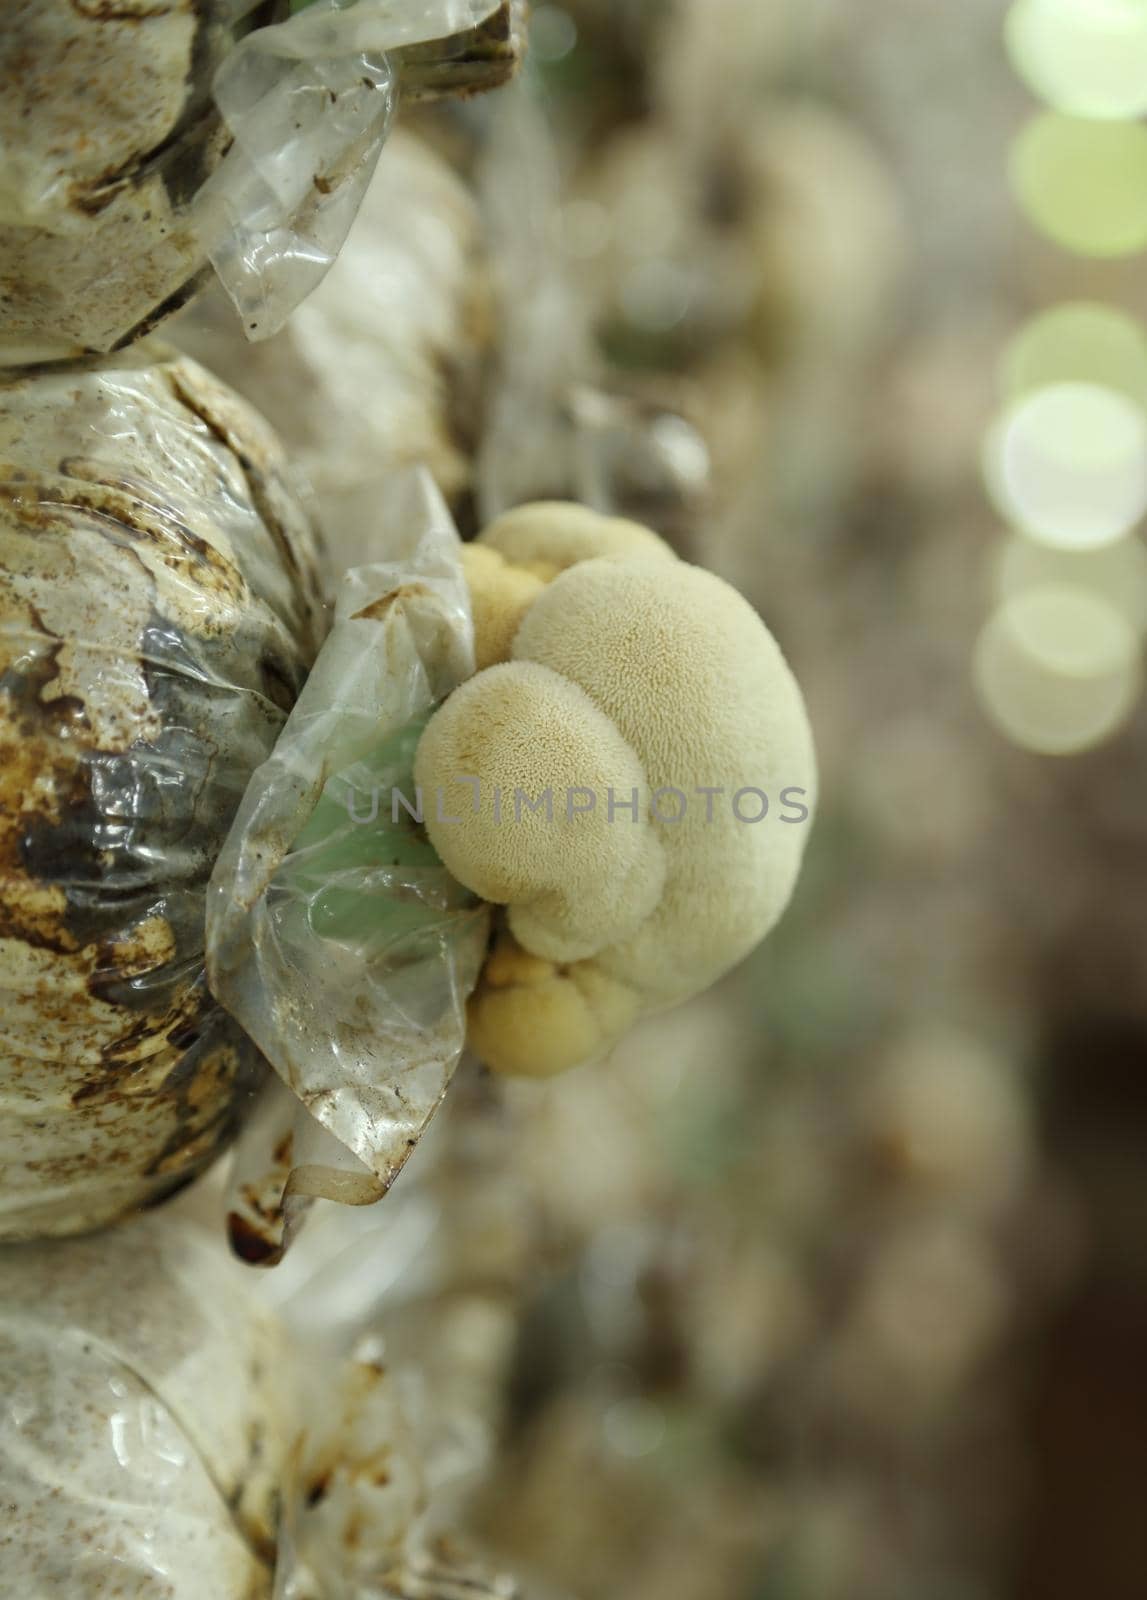 Monkey head mushroom (Yamabushitake mushroom) on spawn bags growing in a farm